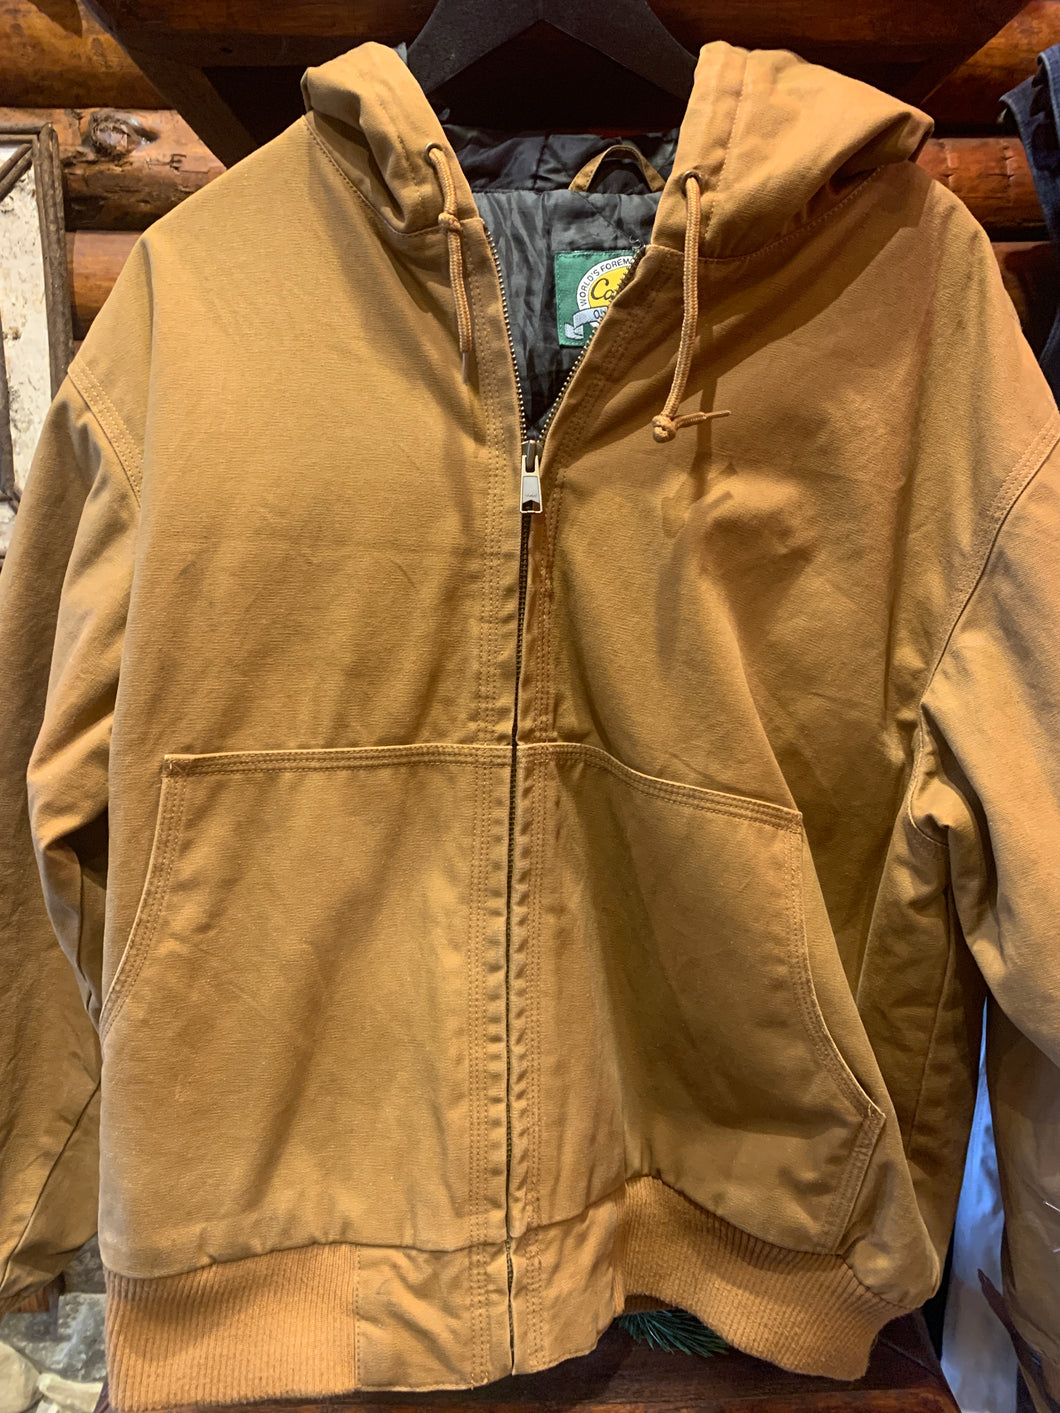 Vintage Cabela's Hunting Fishing Duckcloth Hooded Jacket, Large.